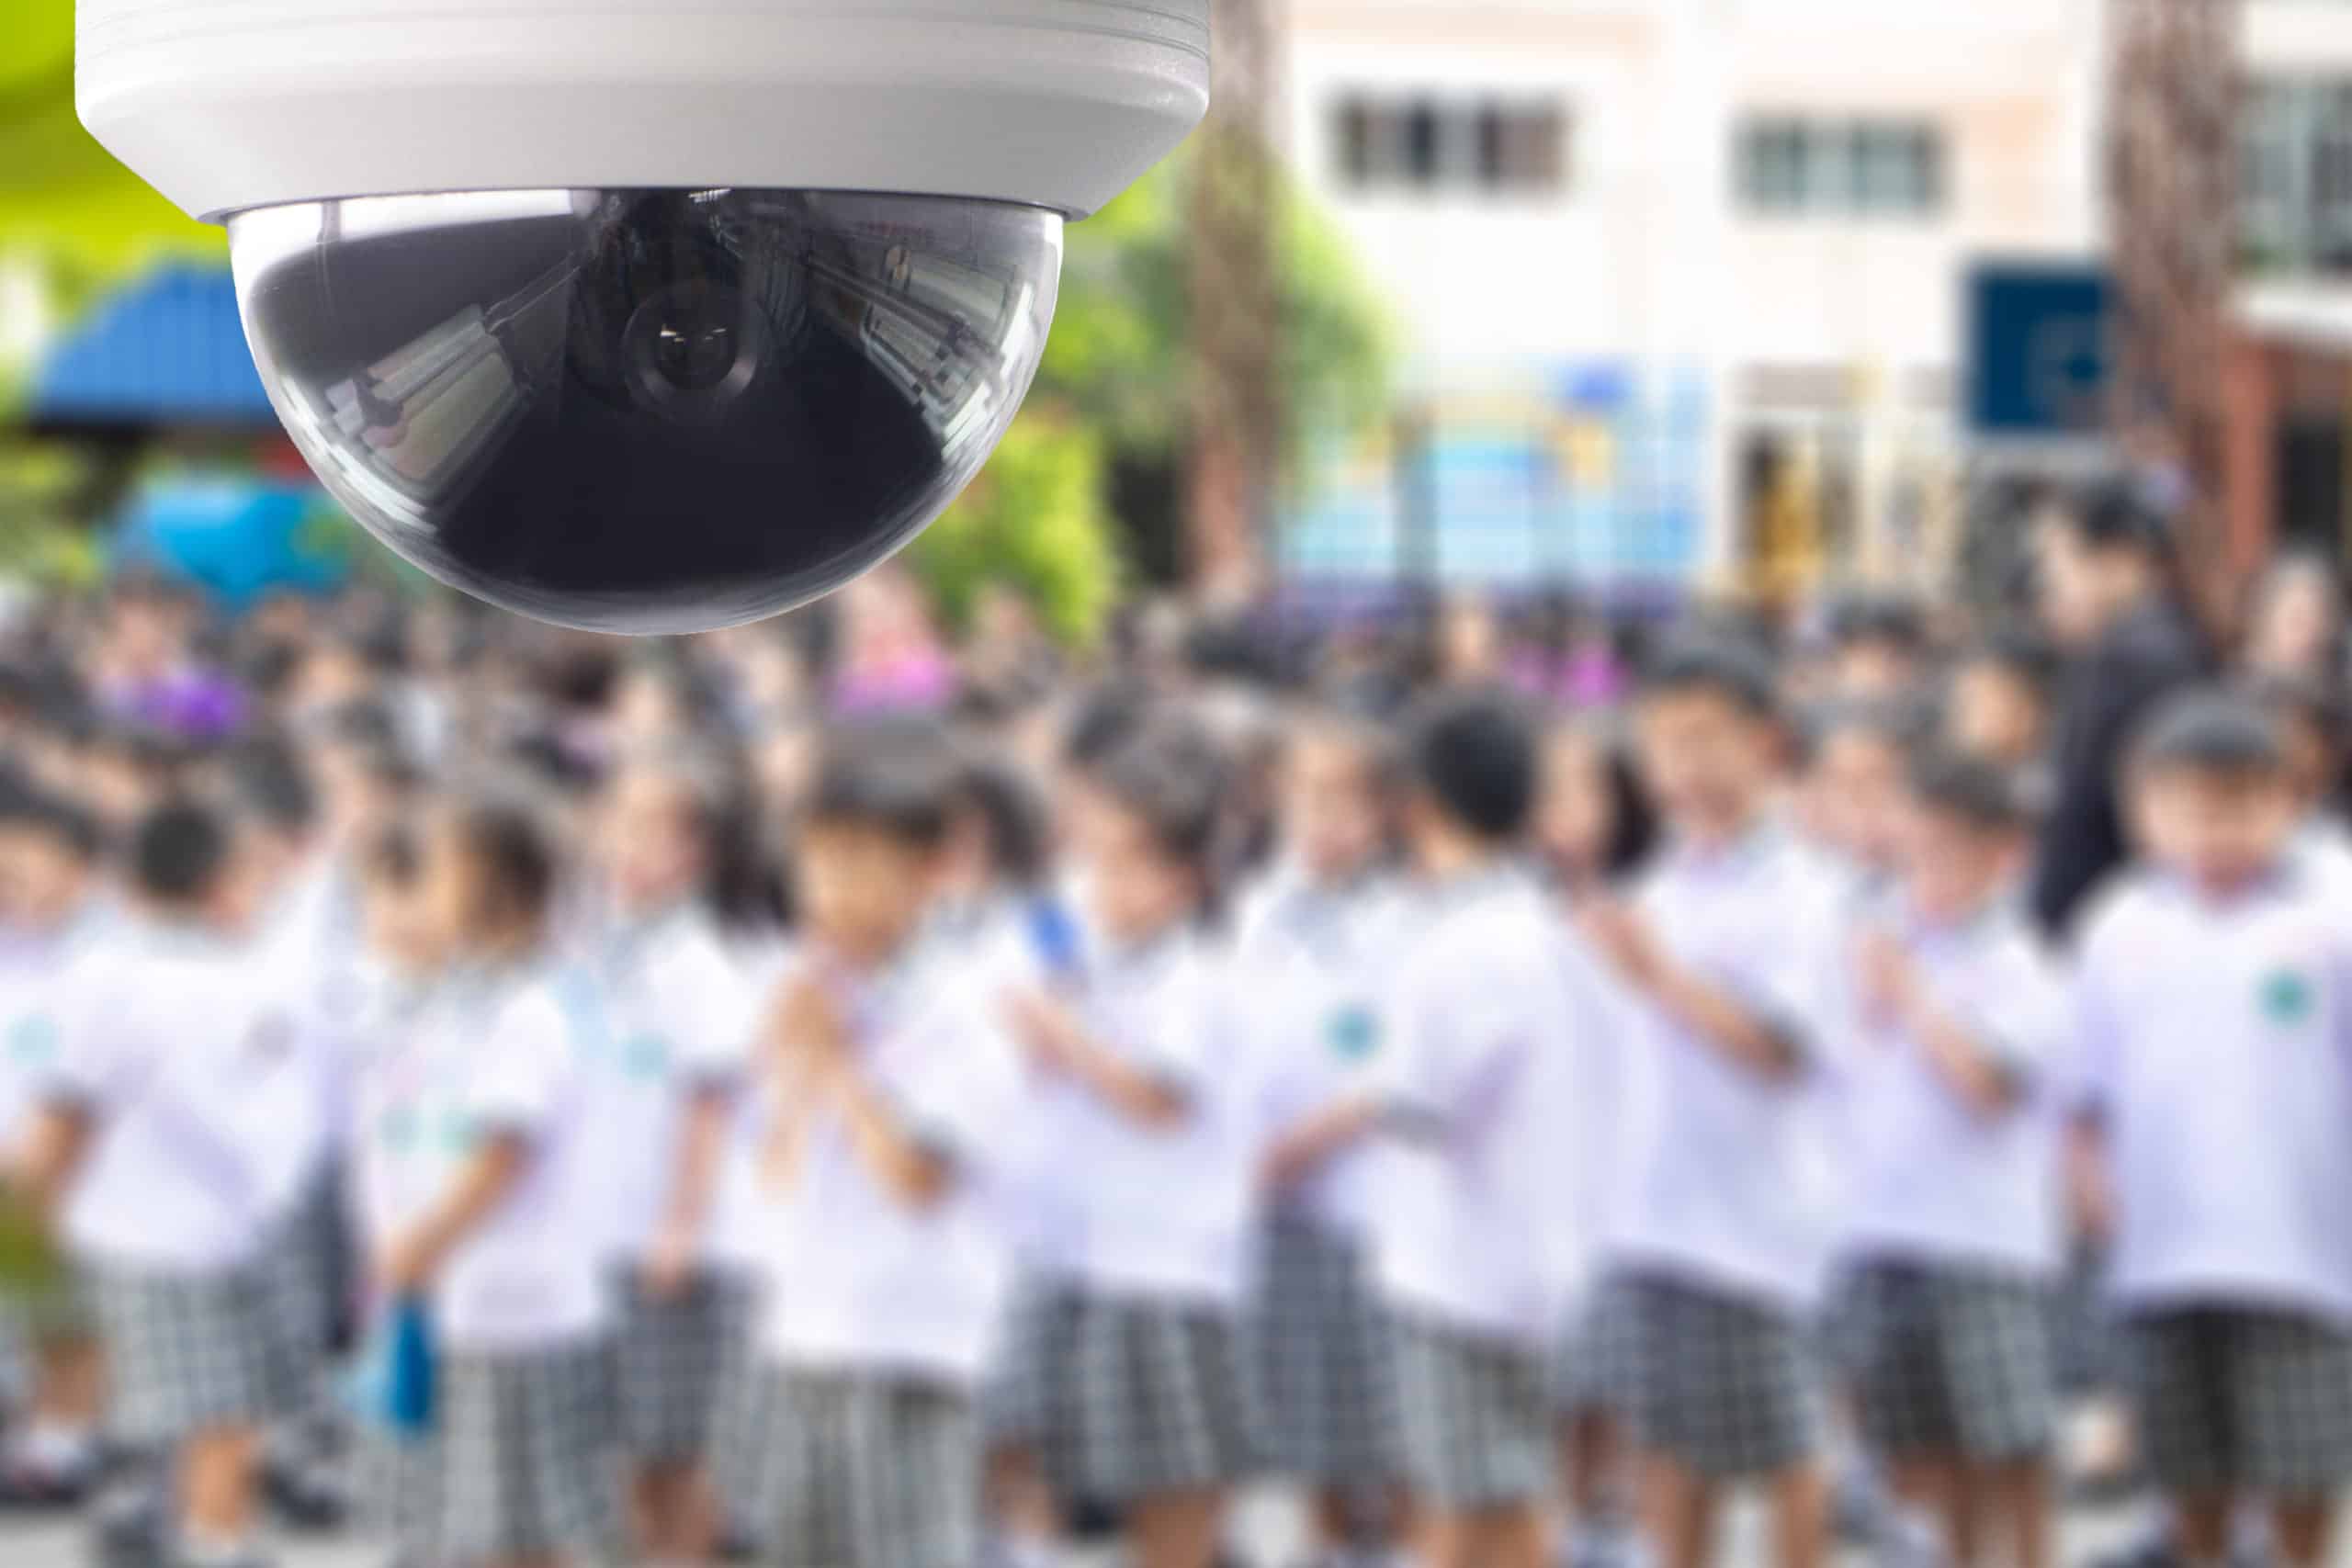 security camera in school ceiling